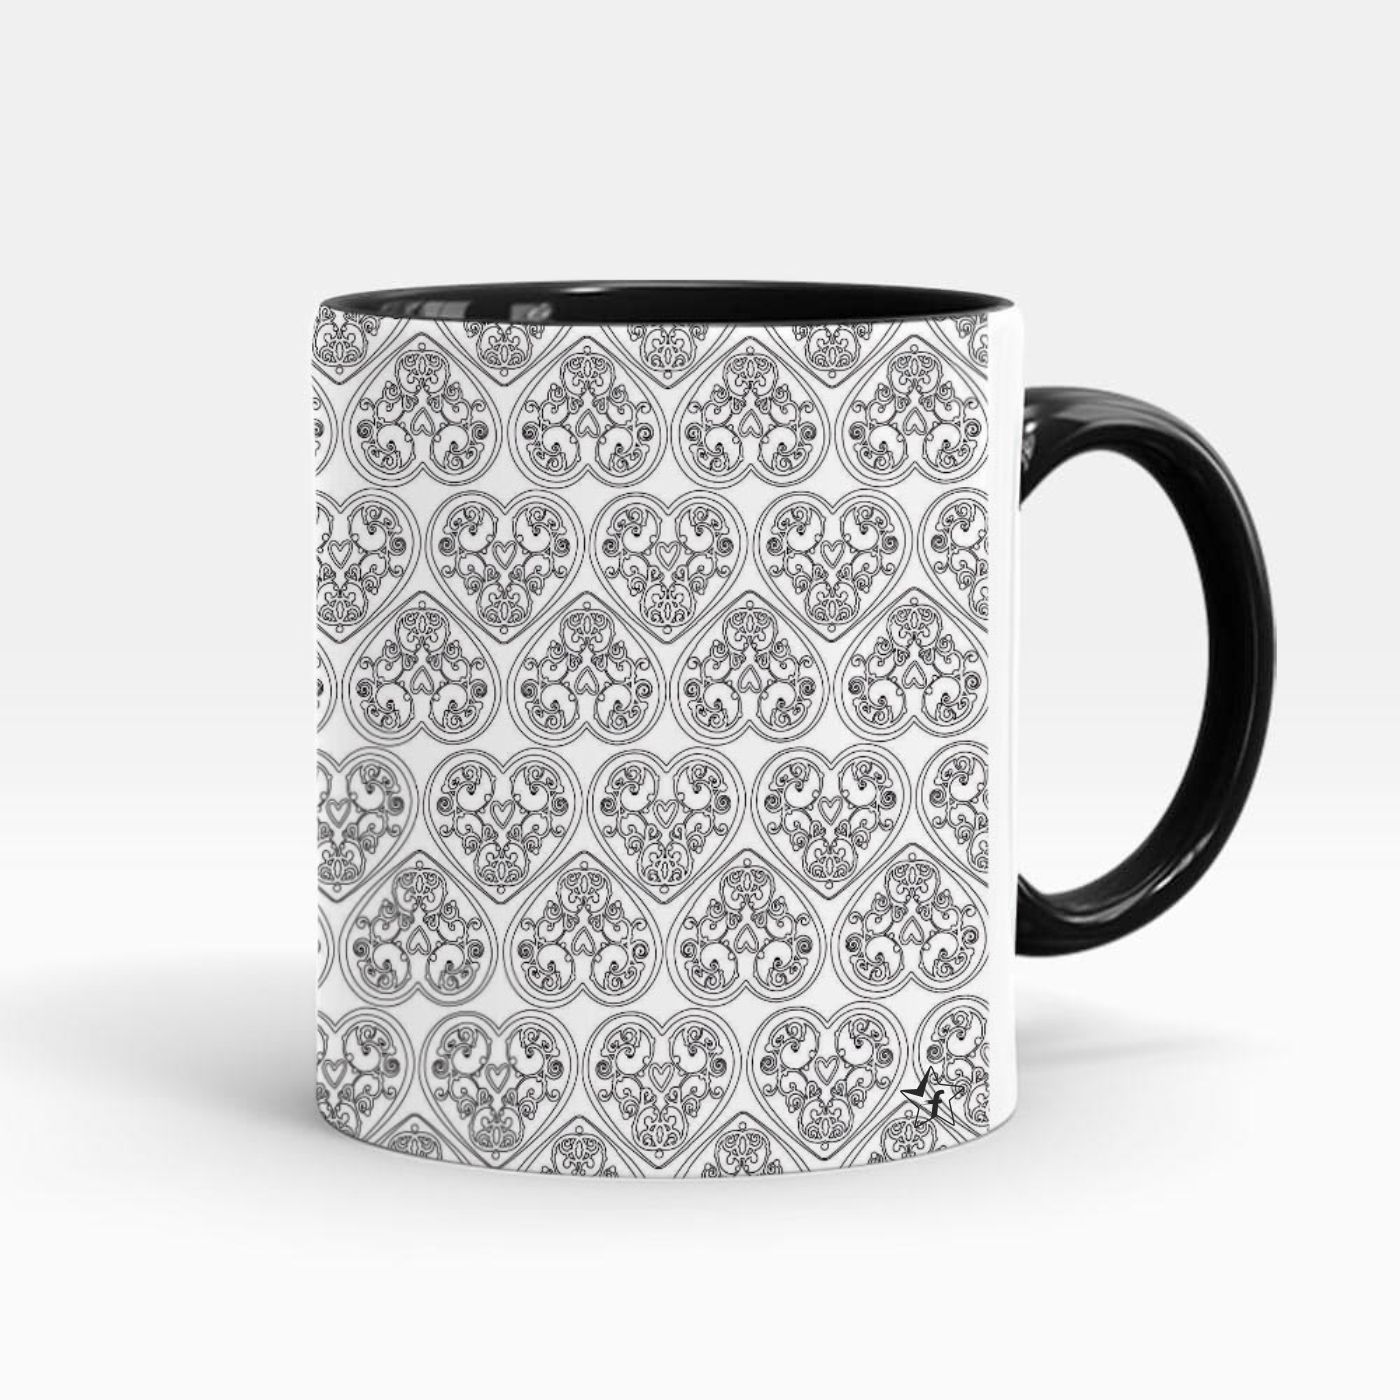 ORKA Digital Printed Theme 46 Coffee Mug  